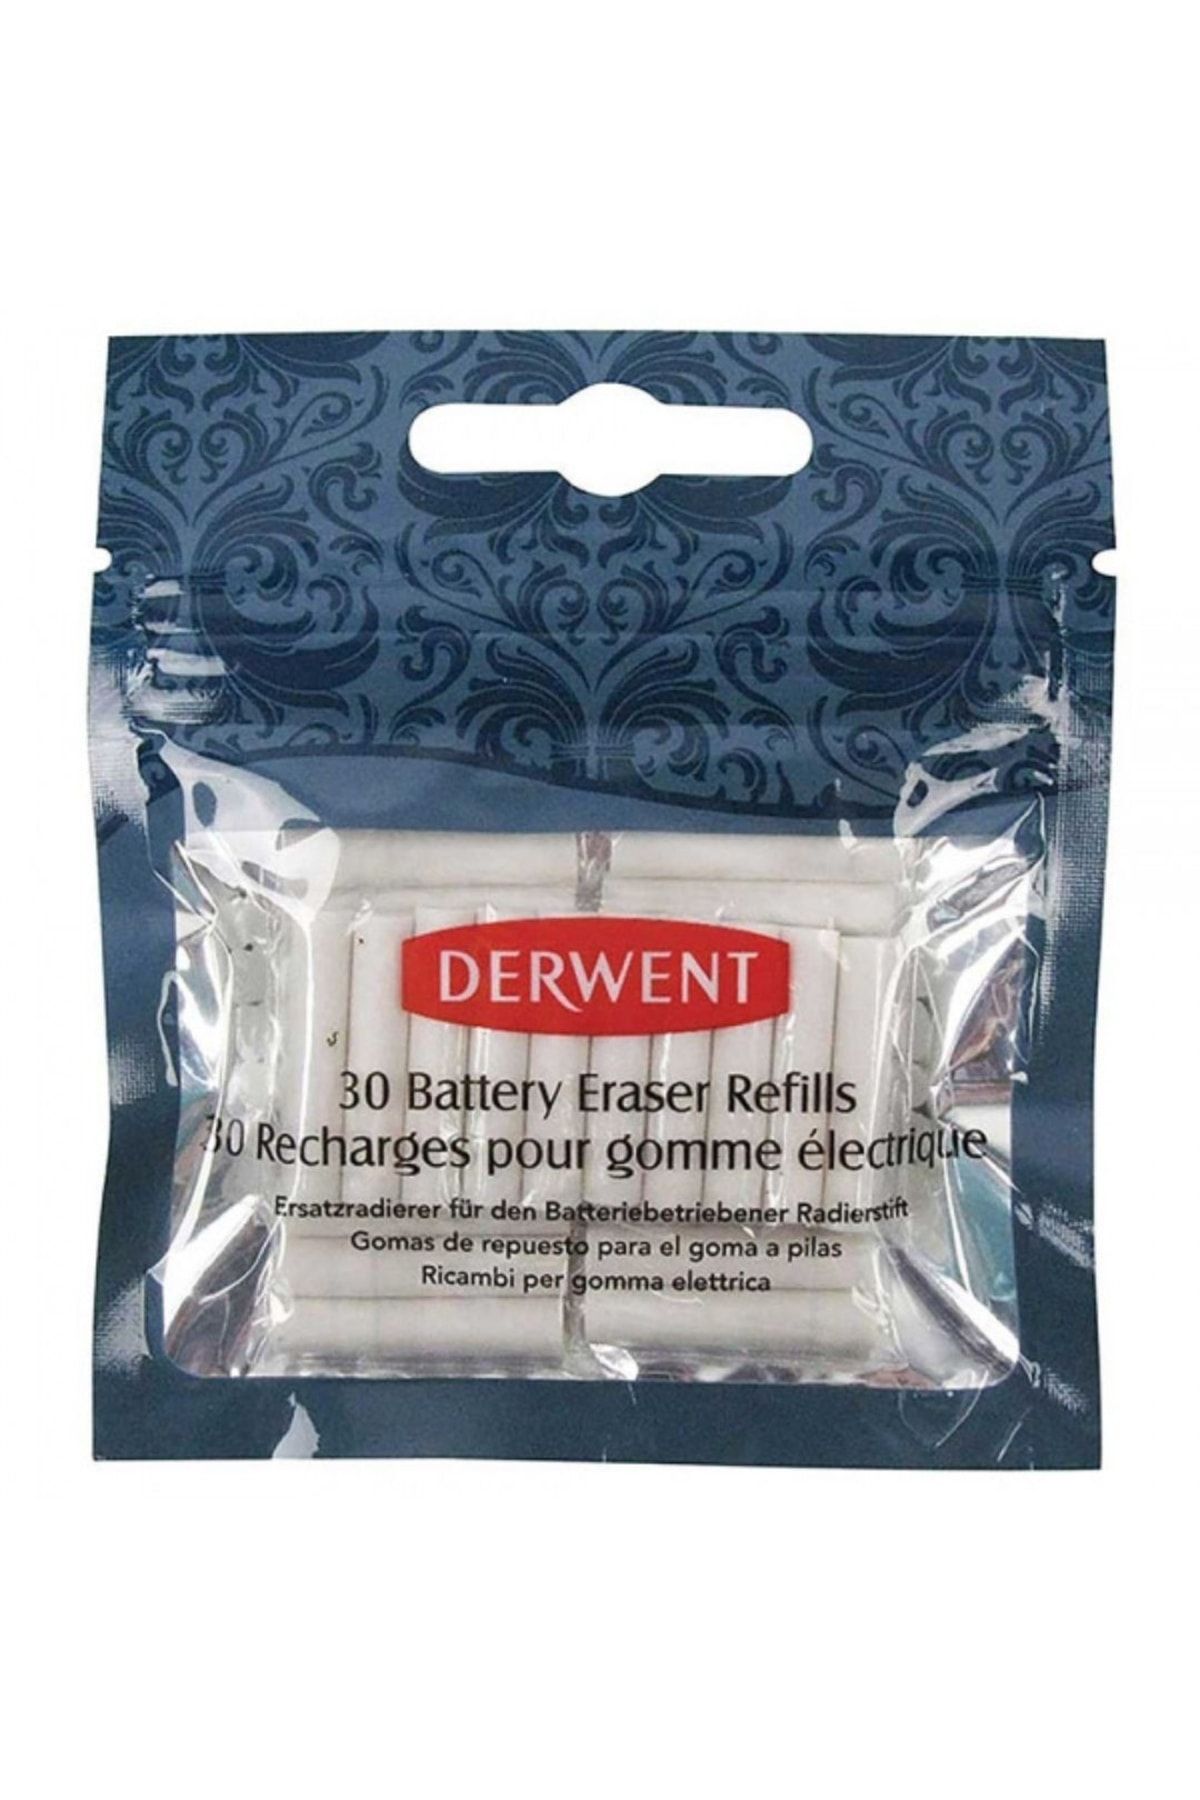 Derwent Replacement Erasers (silgi Yedeği)